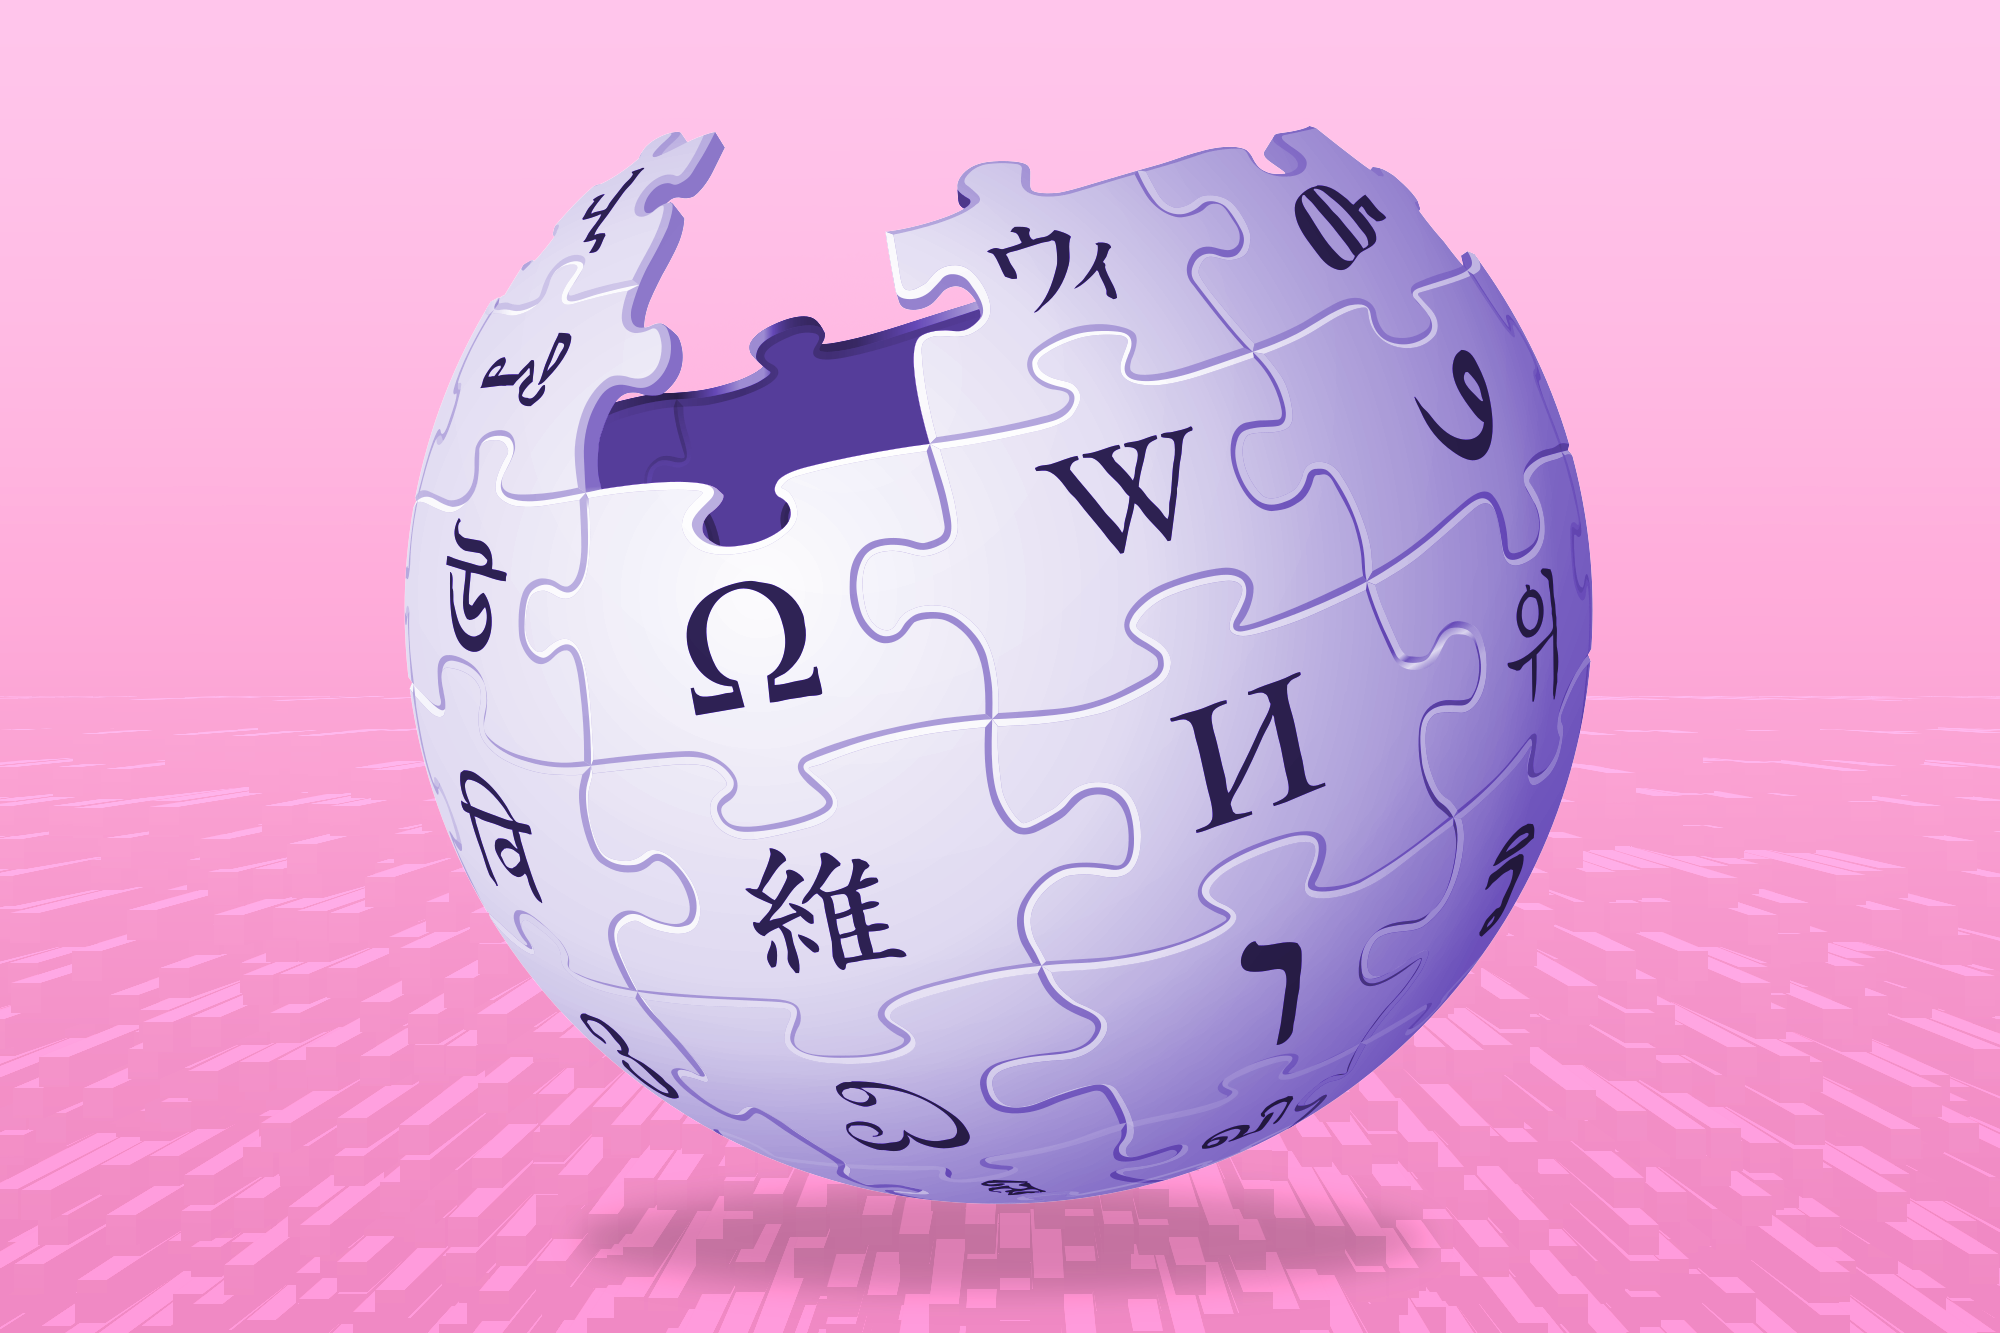 ویکیپدیا با کمک هوش مصنوعی متا تقویت می شود